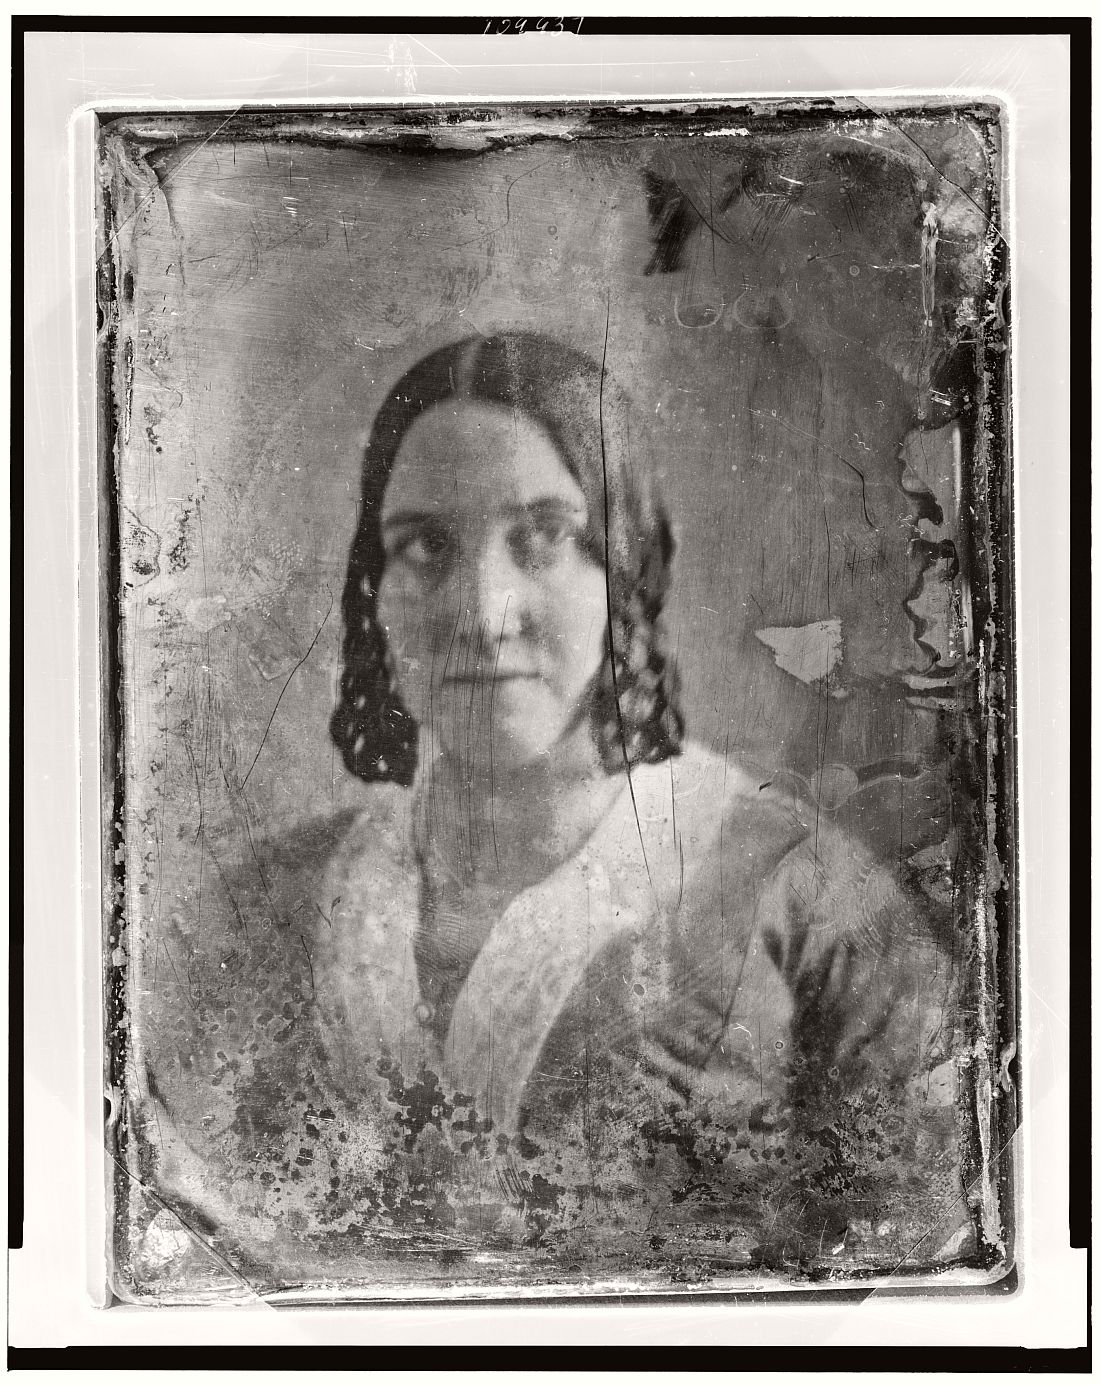 vintage-daguerreotype-portraits-from-xix-century-1844-1860-28